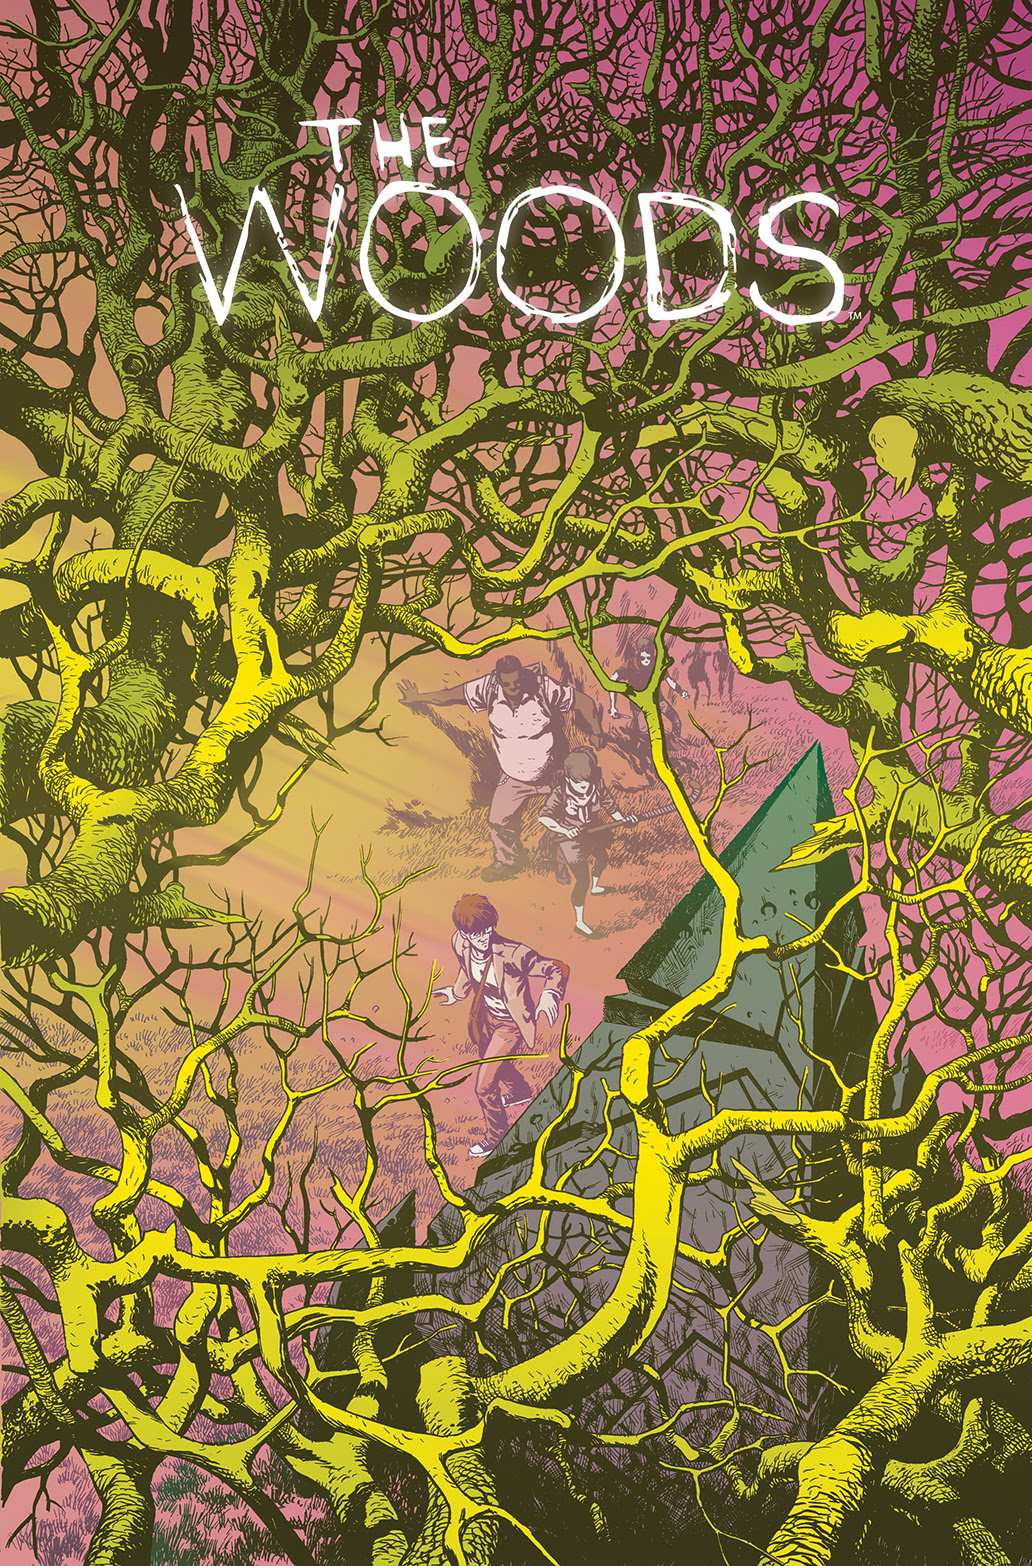 THE WOODS #1 Cover A by Ramón Pérez